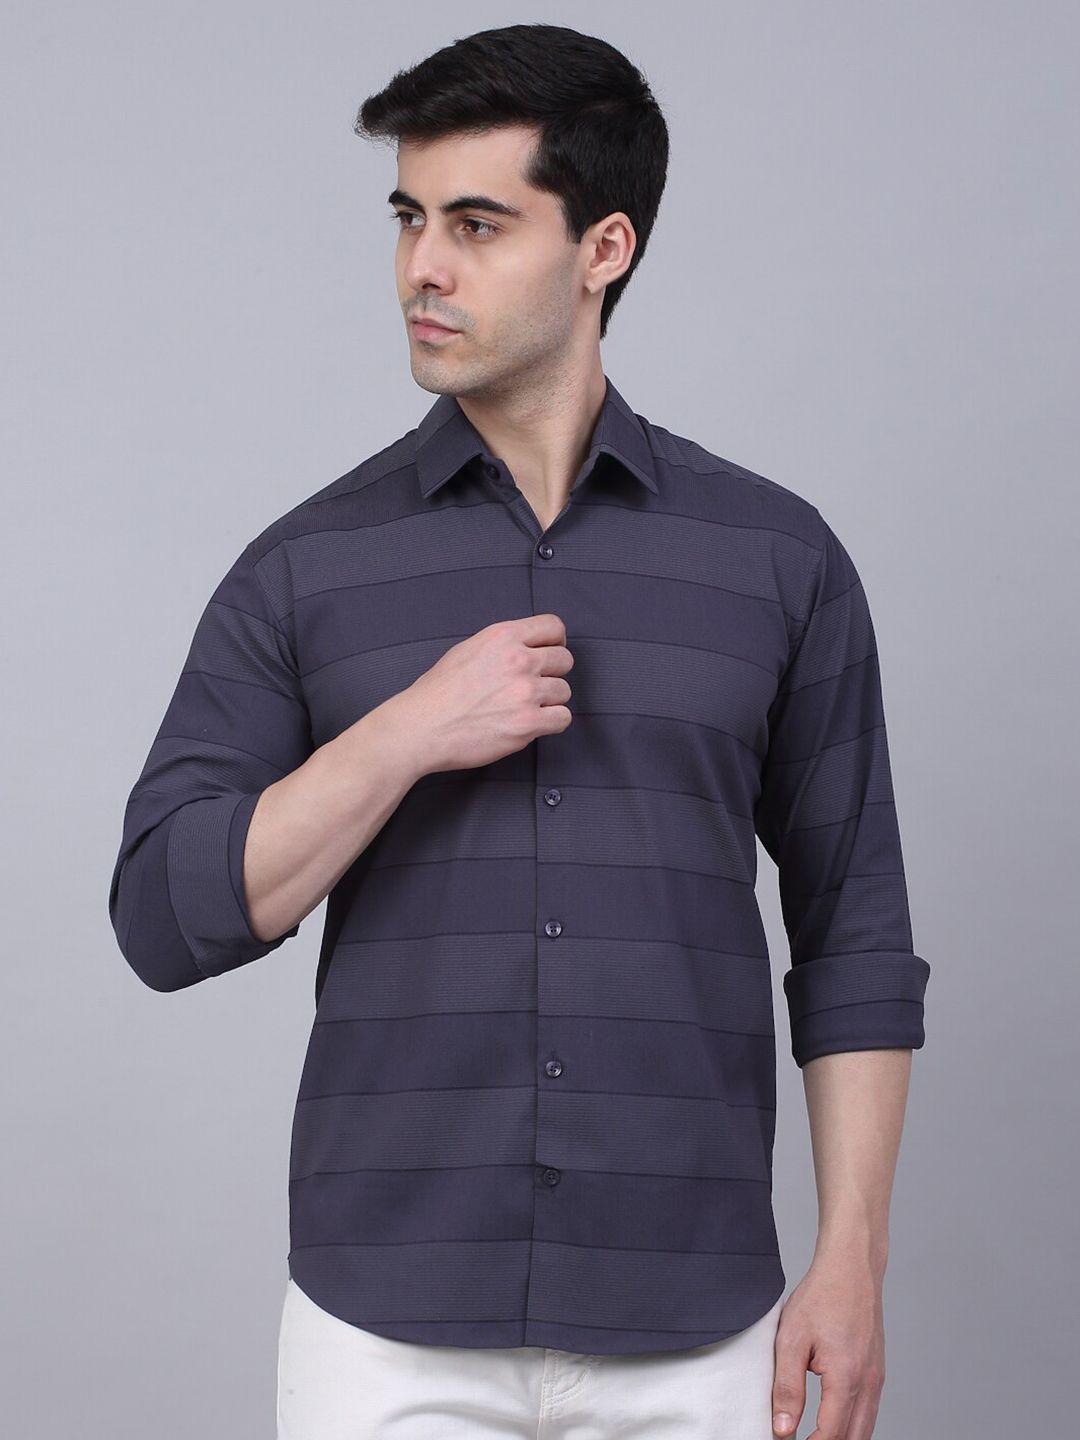 jainish men grey classic horizontal striped casual shirt